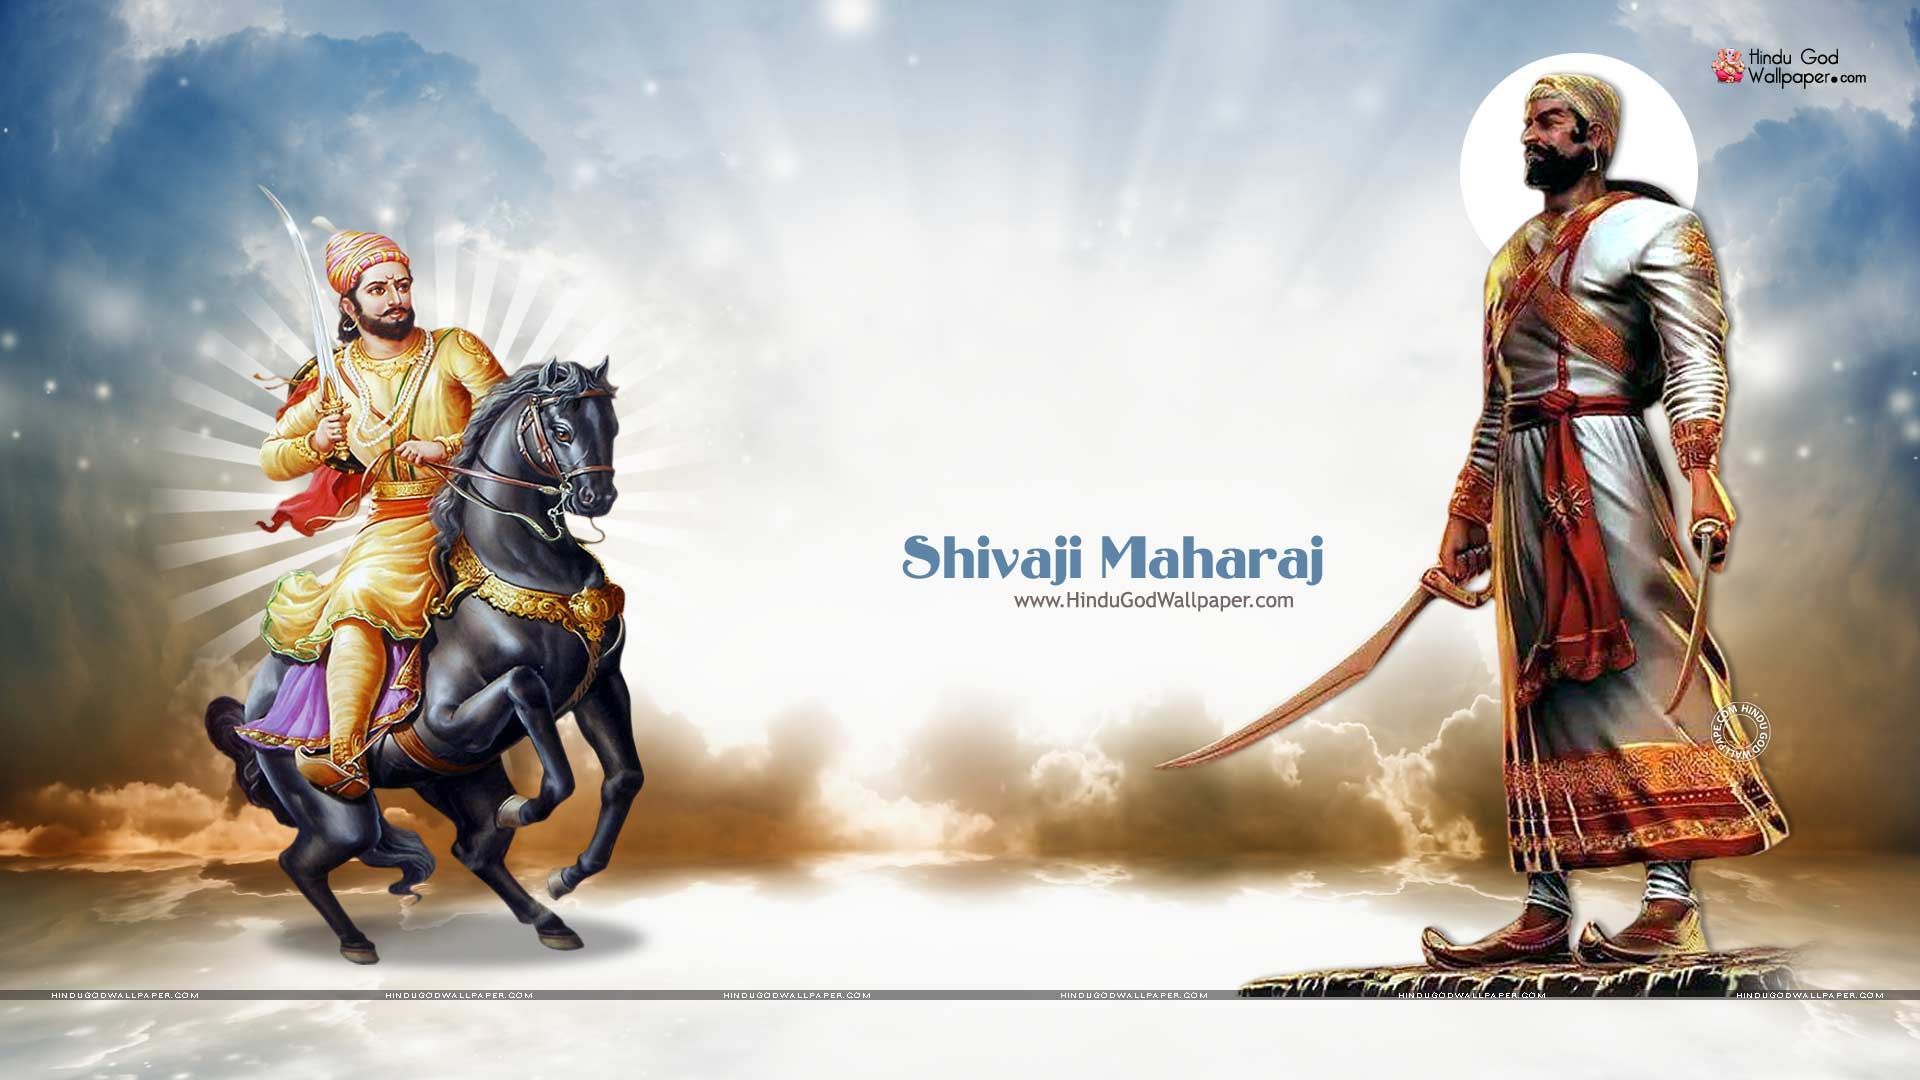 shivaji maharaj wallpaper HD full size. Shivaji maharaj HD wallpaper, Full HD wallpaper download, Shivaji maharaj wallpaper